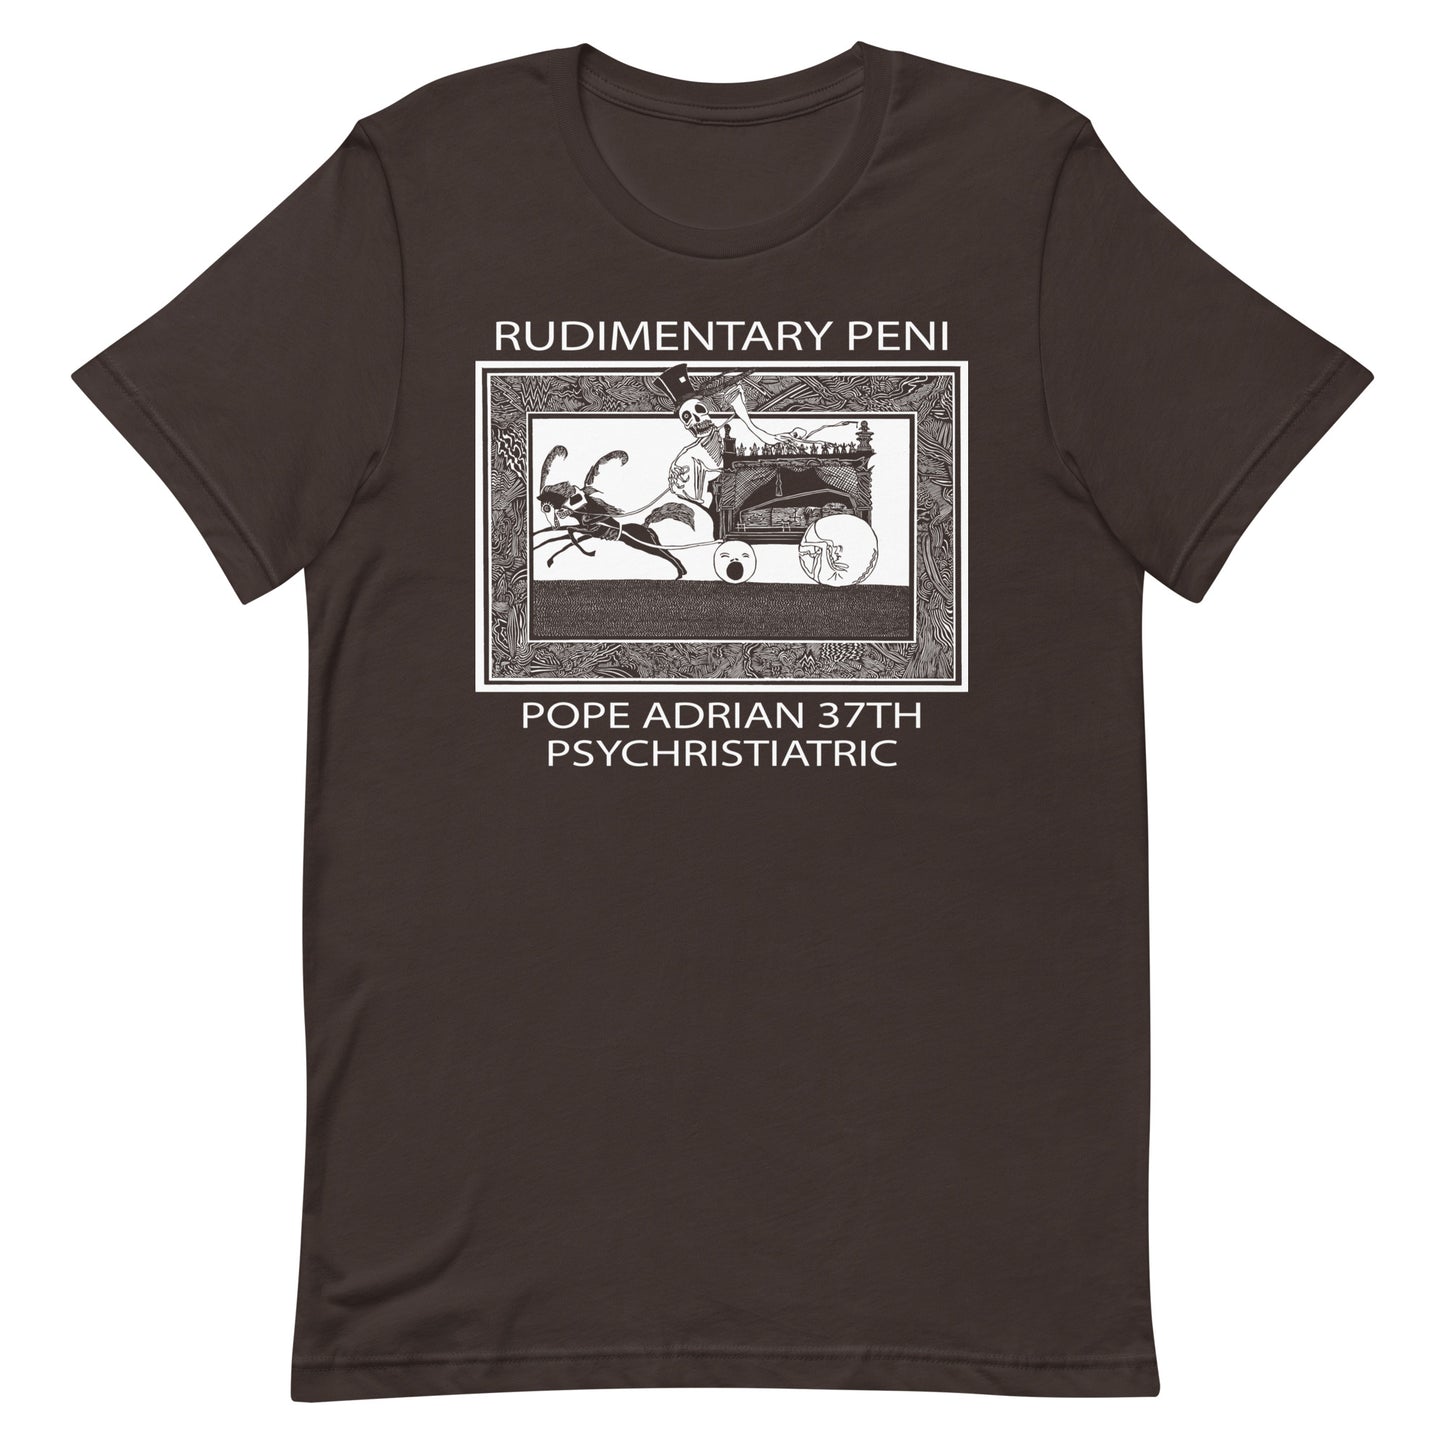 Rudimentary Peni - Pope Adrian 37th Psychristiatric T-Shirt